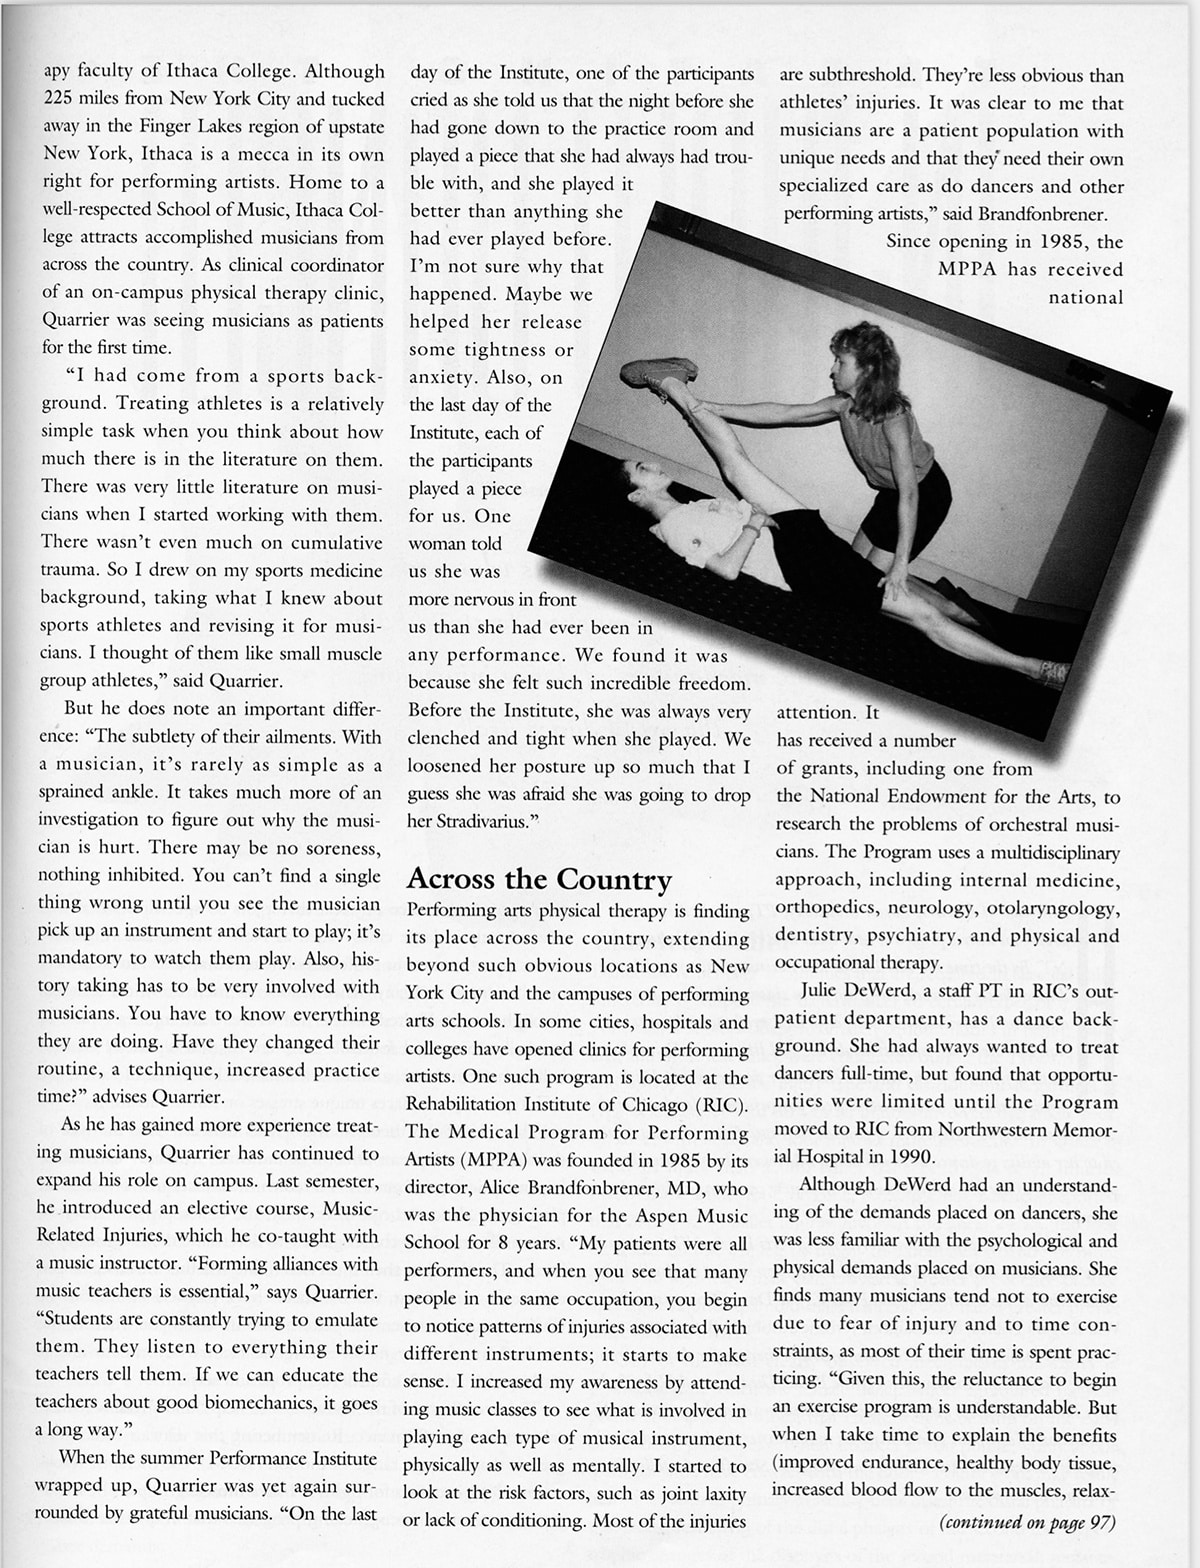 PT Magazine Performing Arts pilates archive article 7